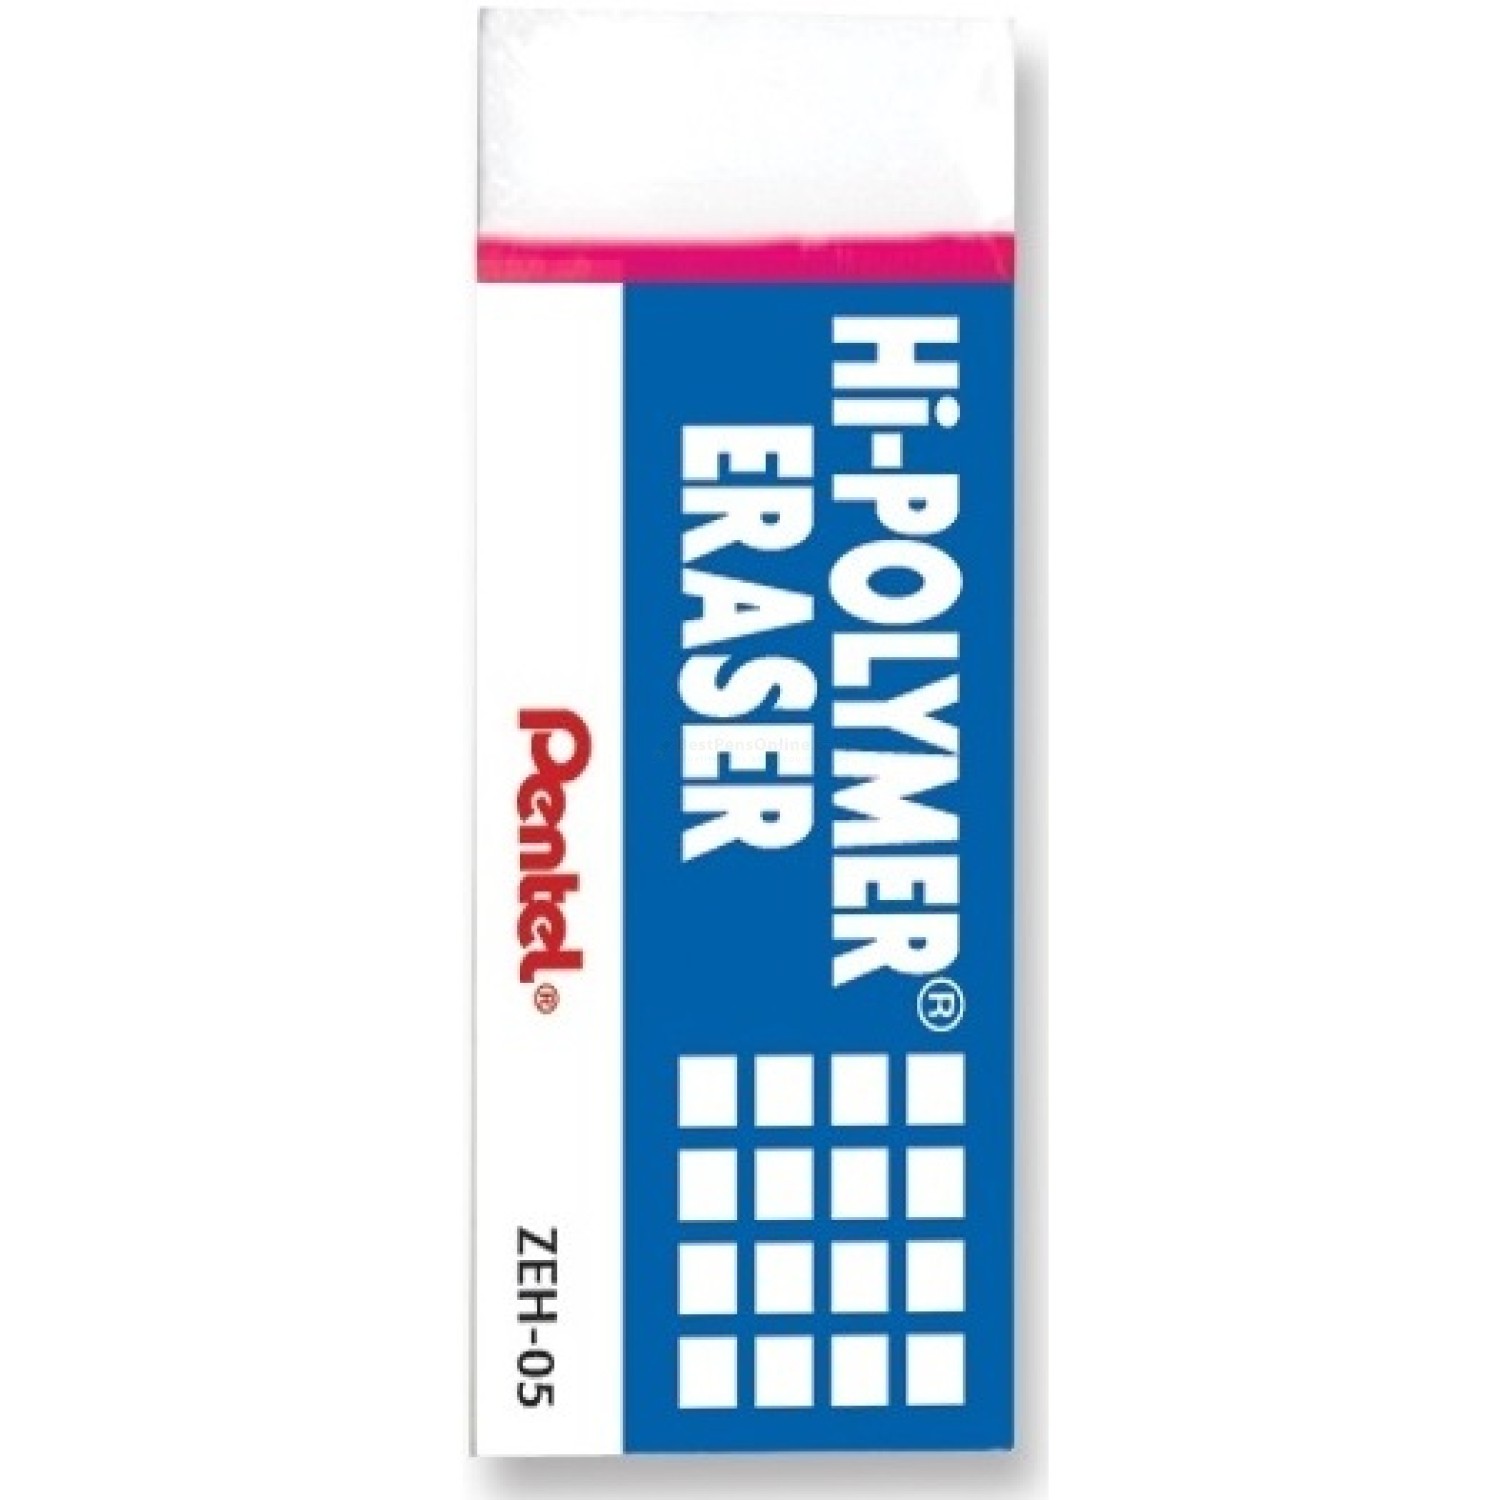 Pentel Hi Polymer Eraser, Small